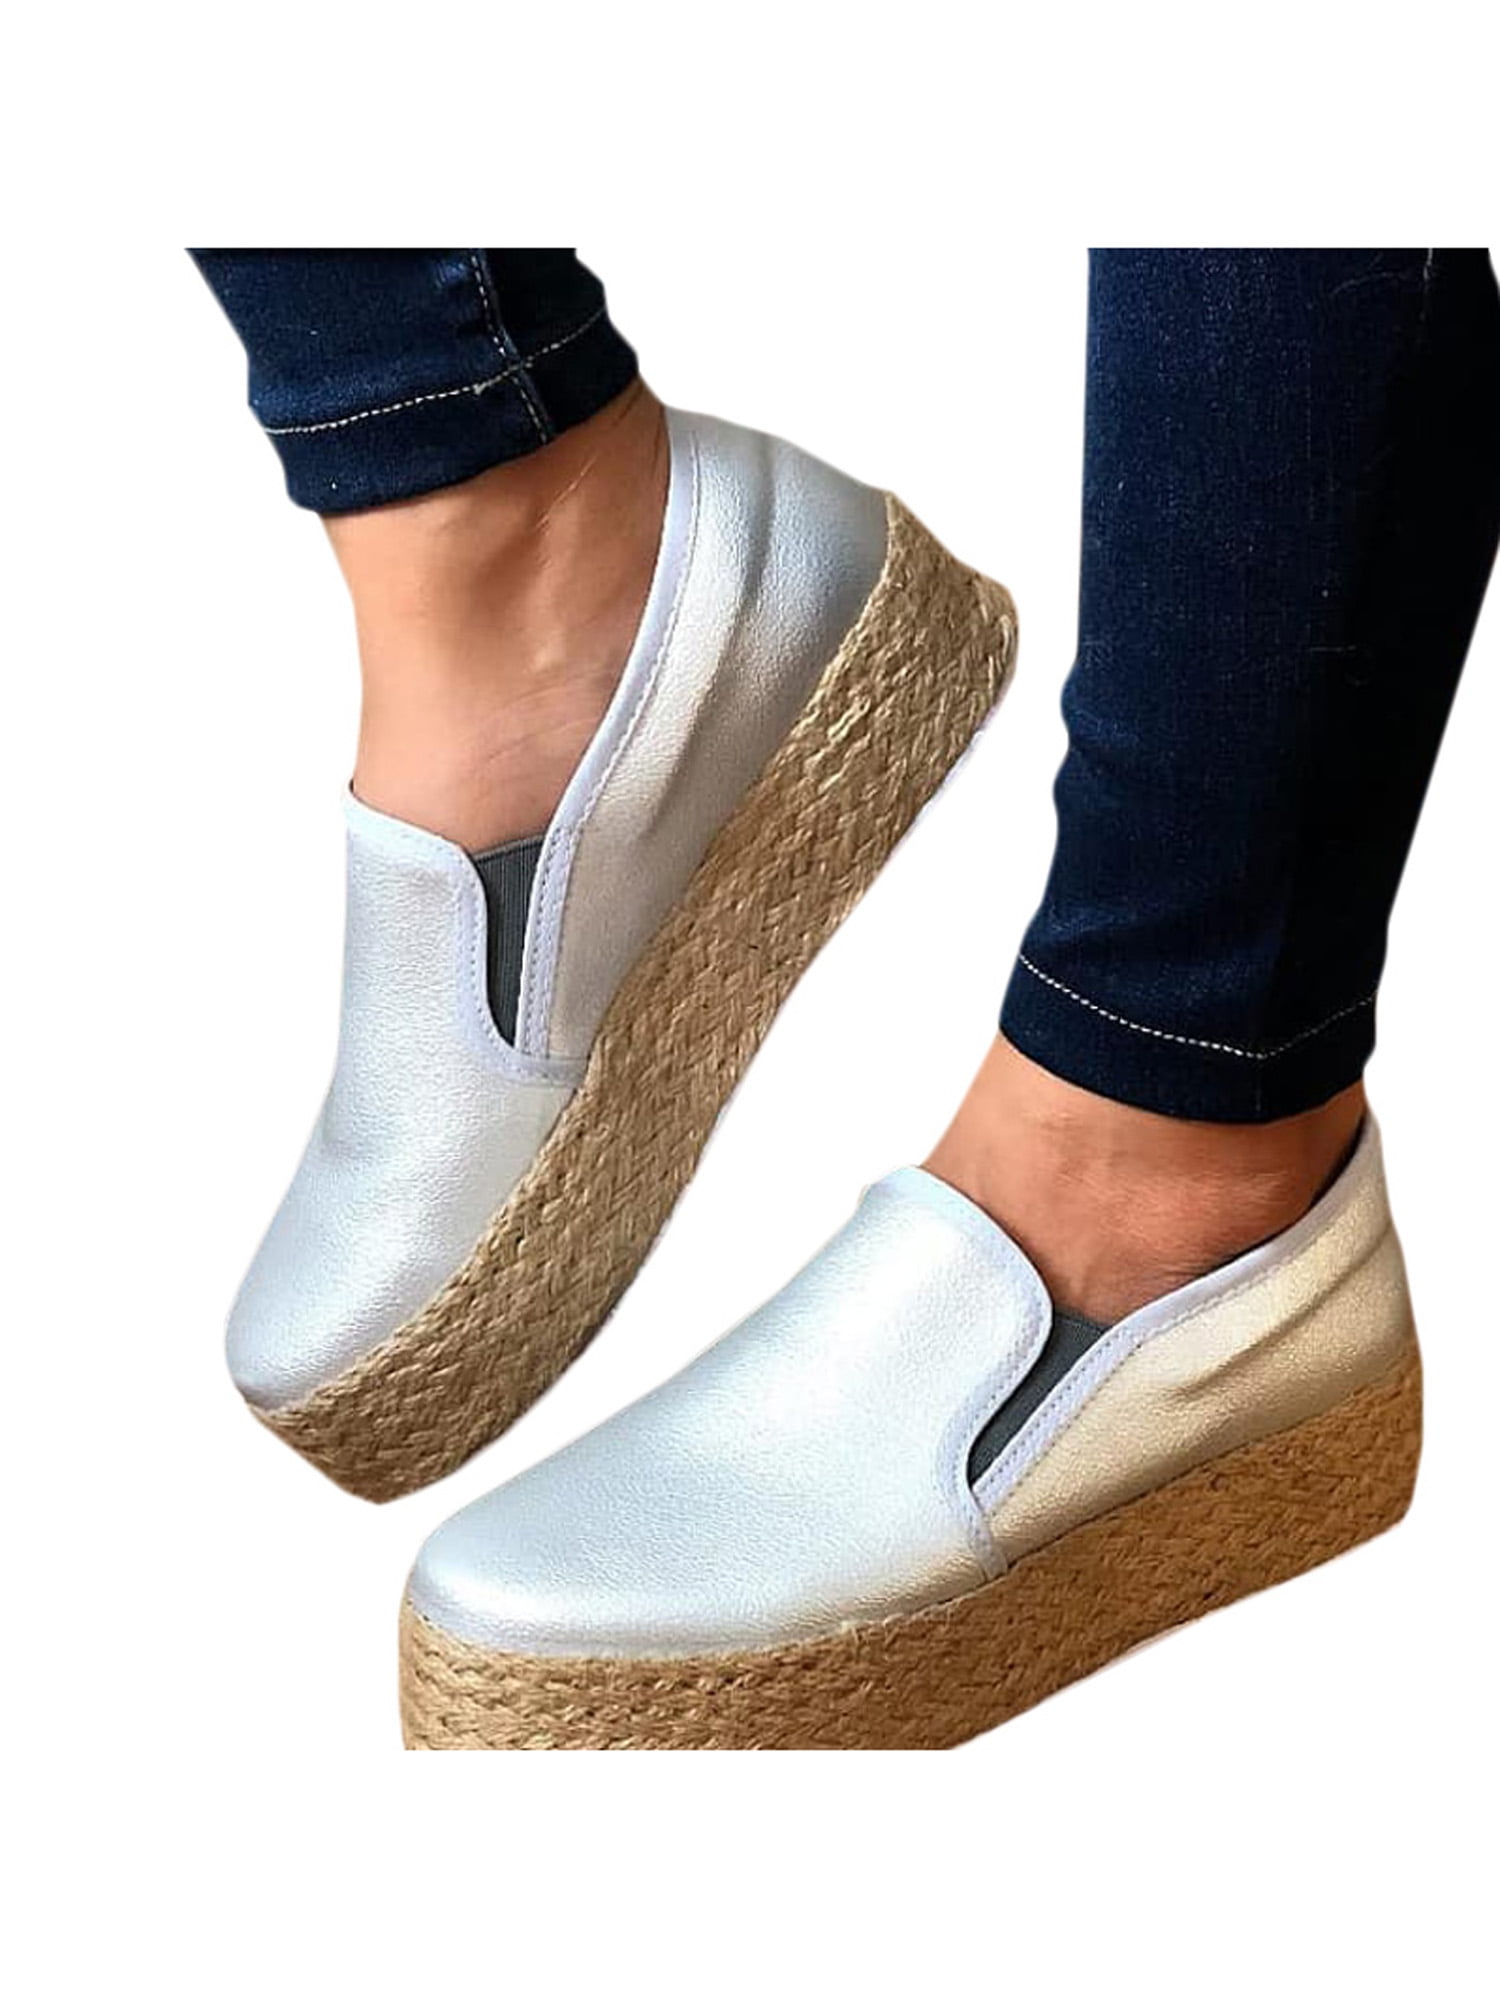 Hot Women Round Toe Platform Cushion Nurse Loafers Wedge Med Heel Pump Shoes New 